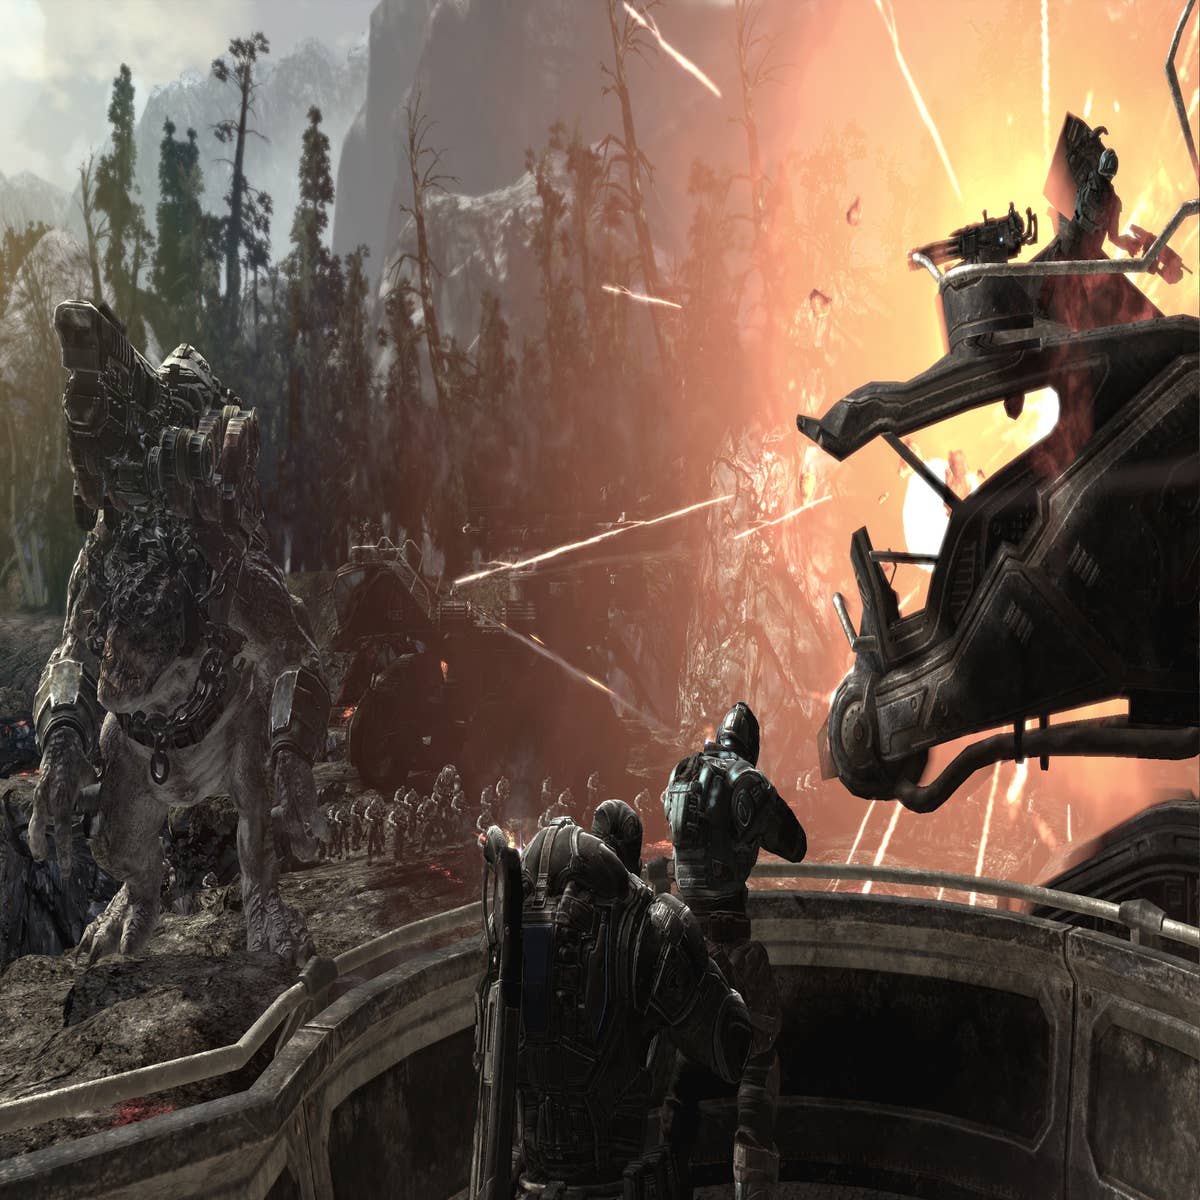 Gears Of War 2 para Xbox 360 - Epic Games - Outros Games